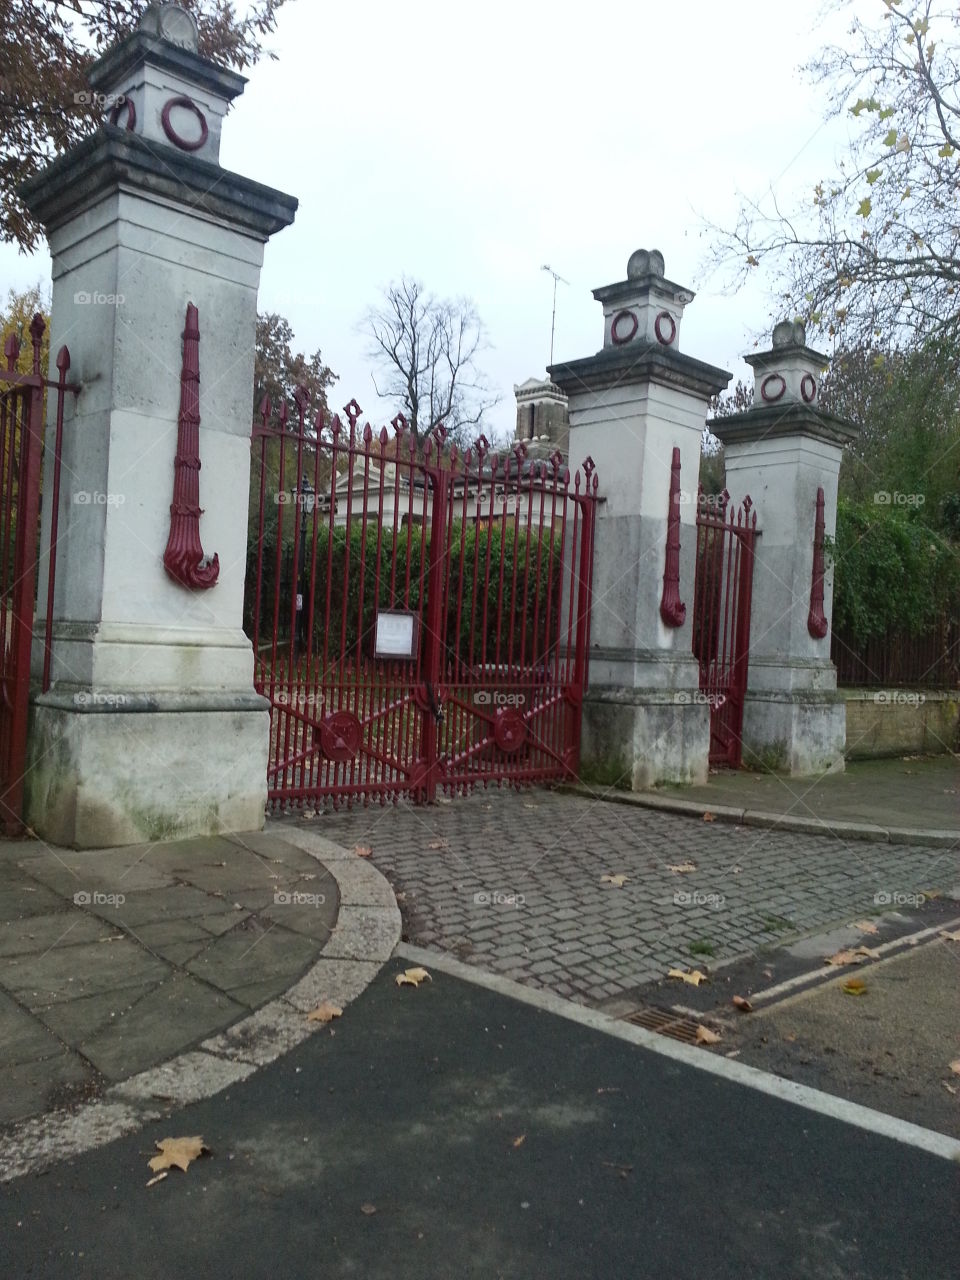 The gates to Nunshead Cemetery